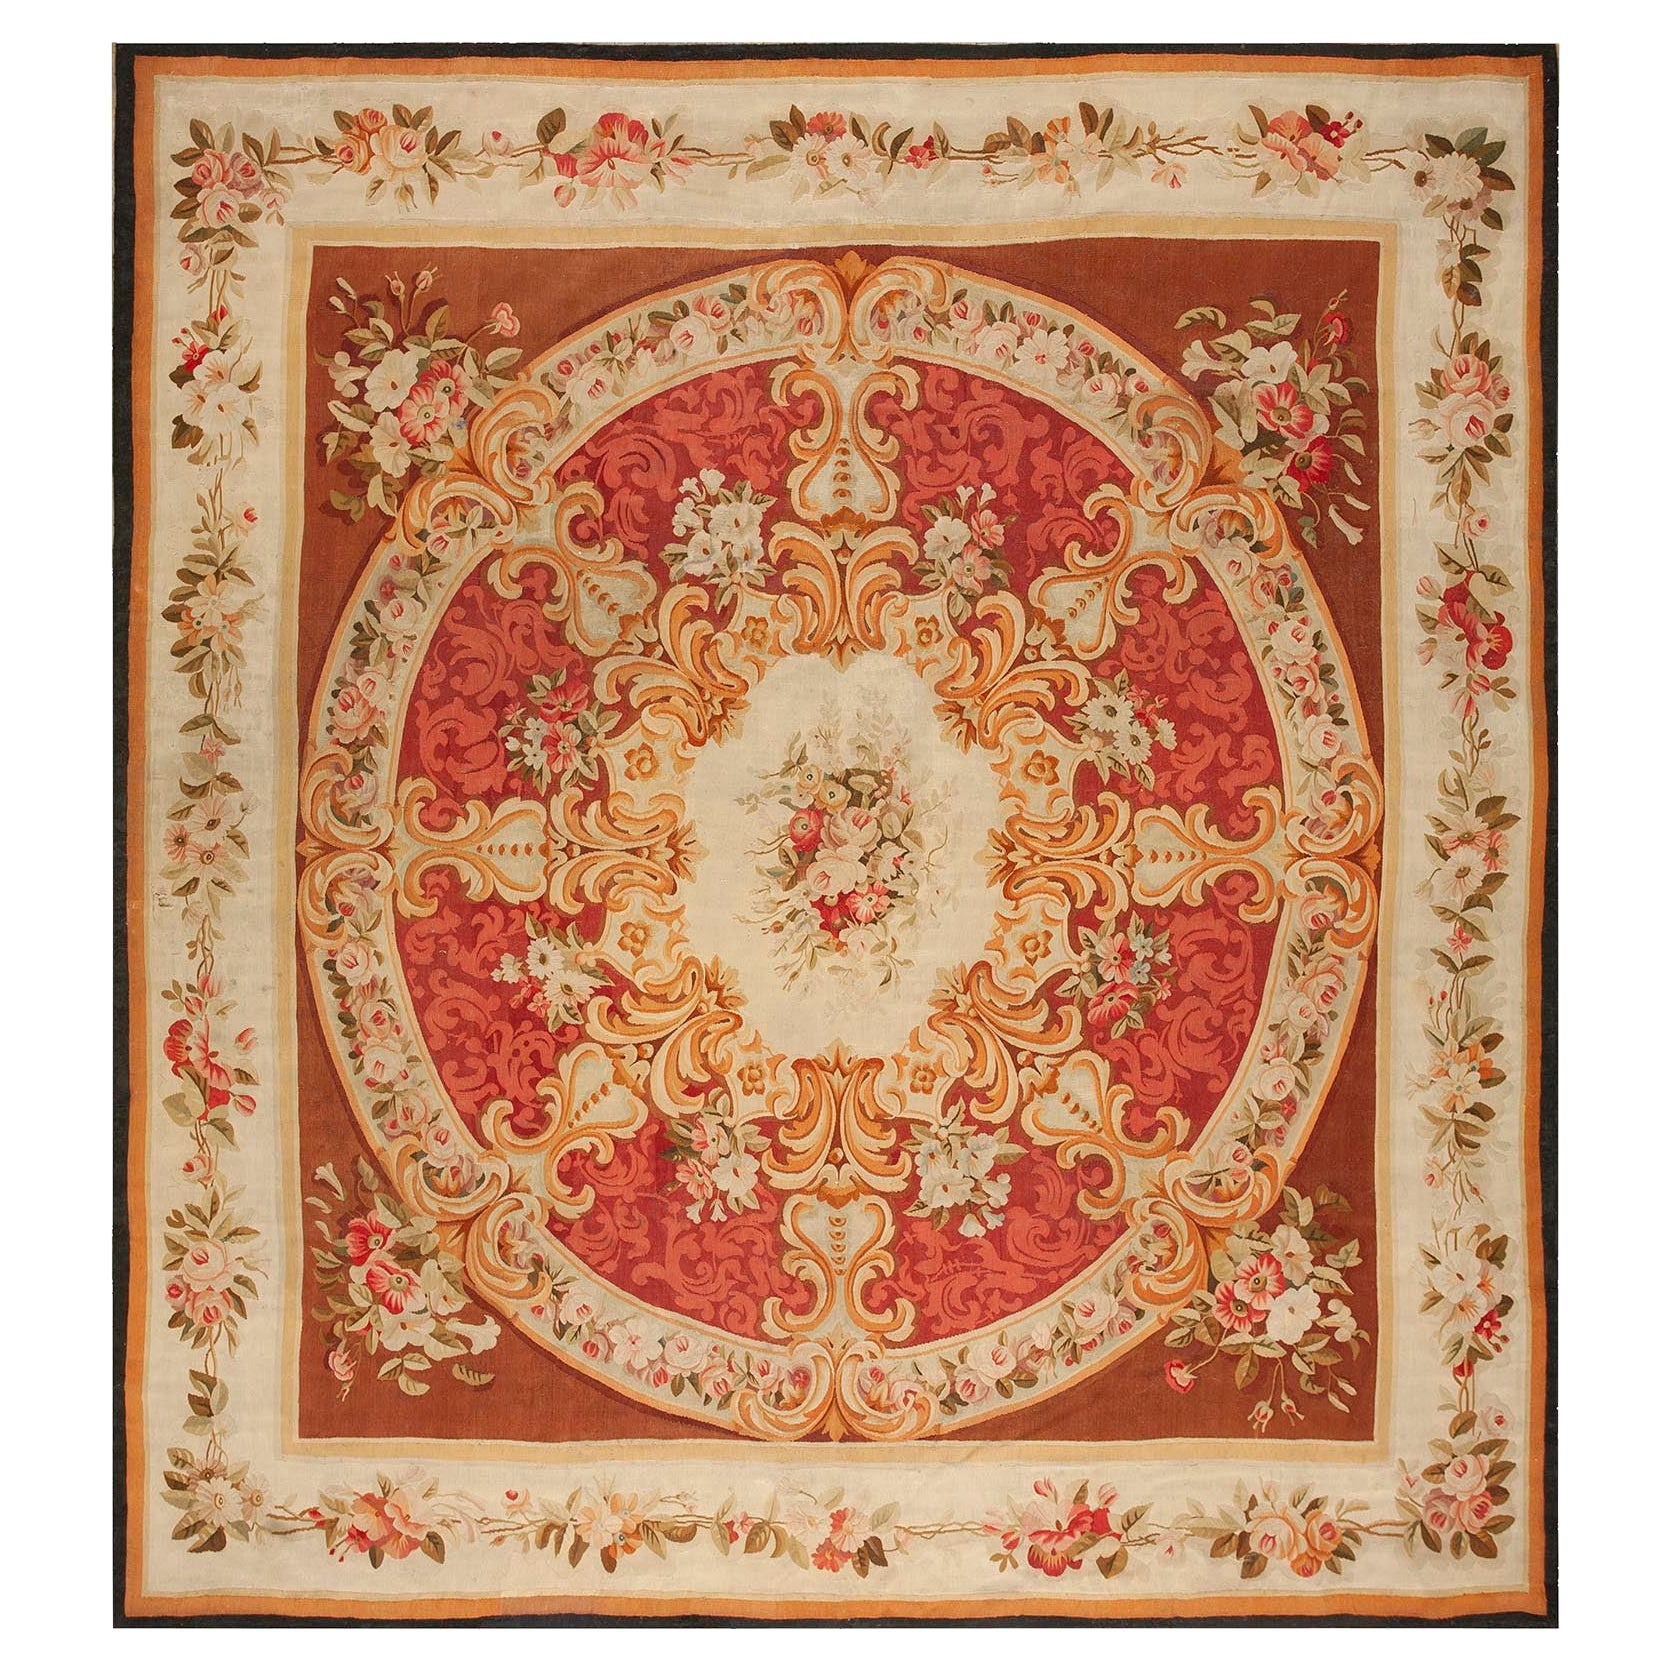 French Aubusson Carpet Circa 1870s (9'2" x 10' 2" - 280 x 310) 